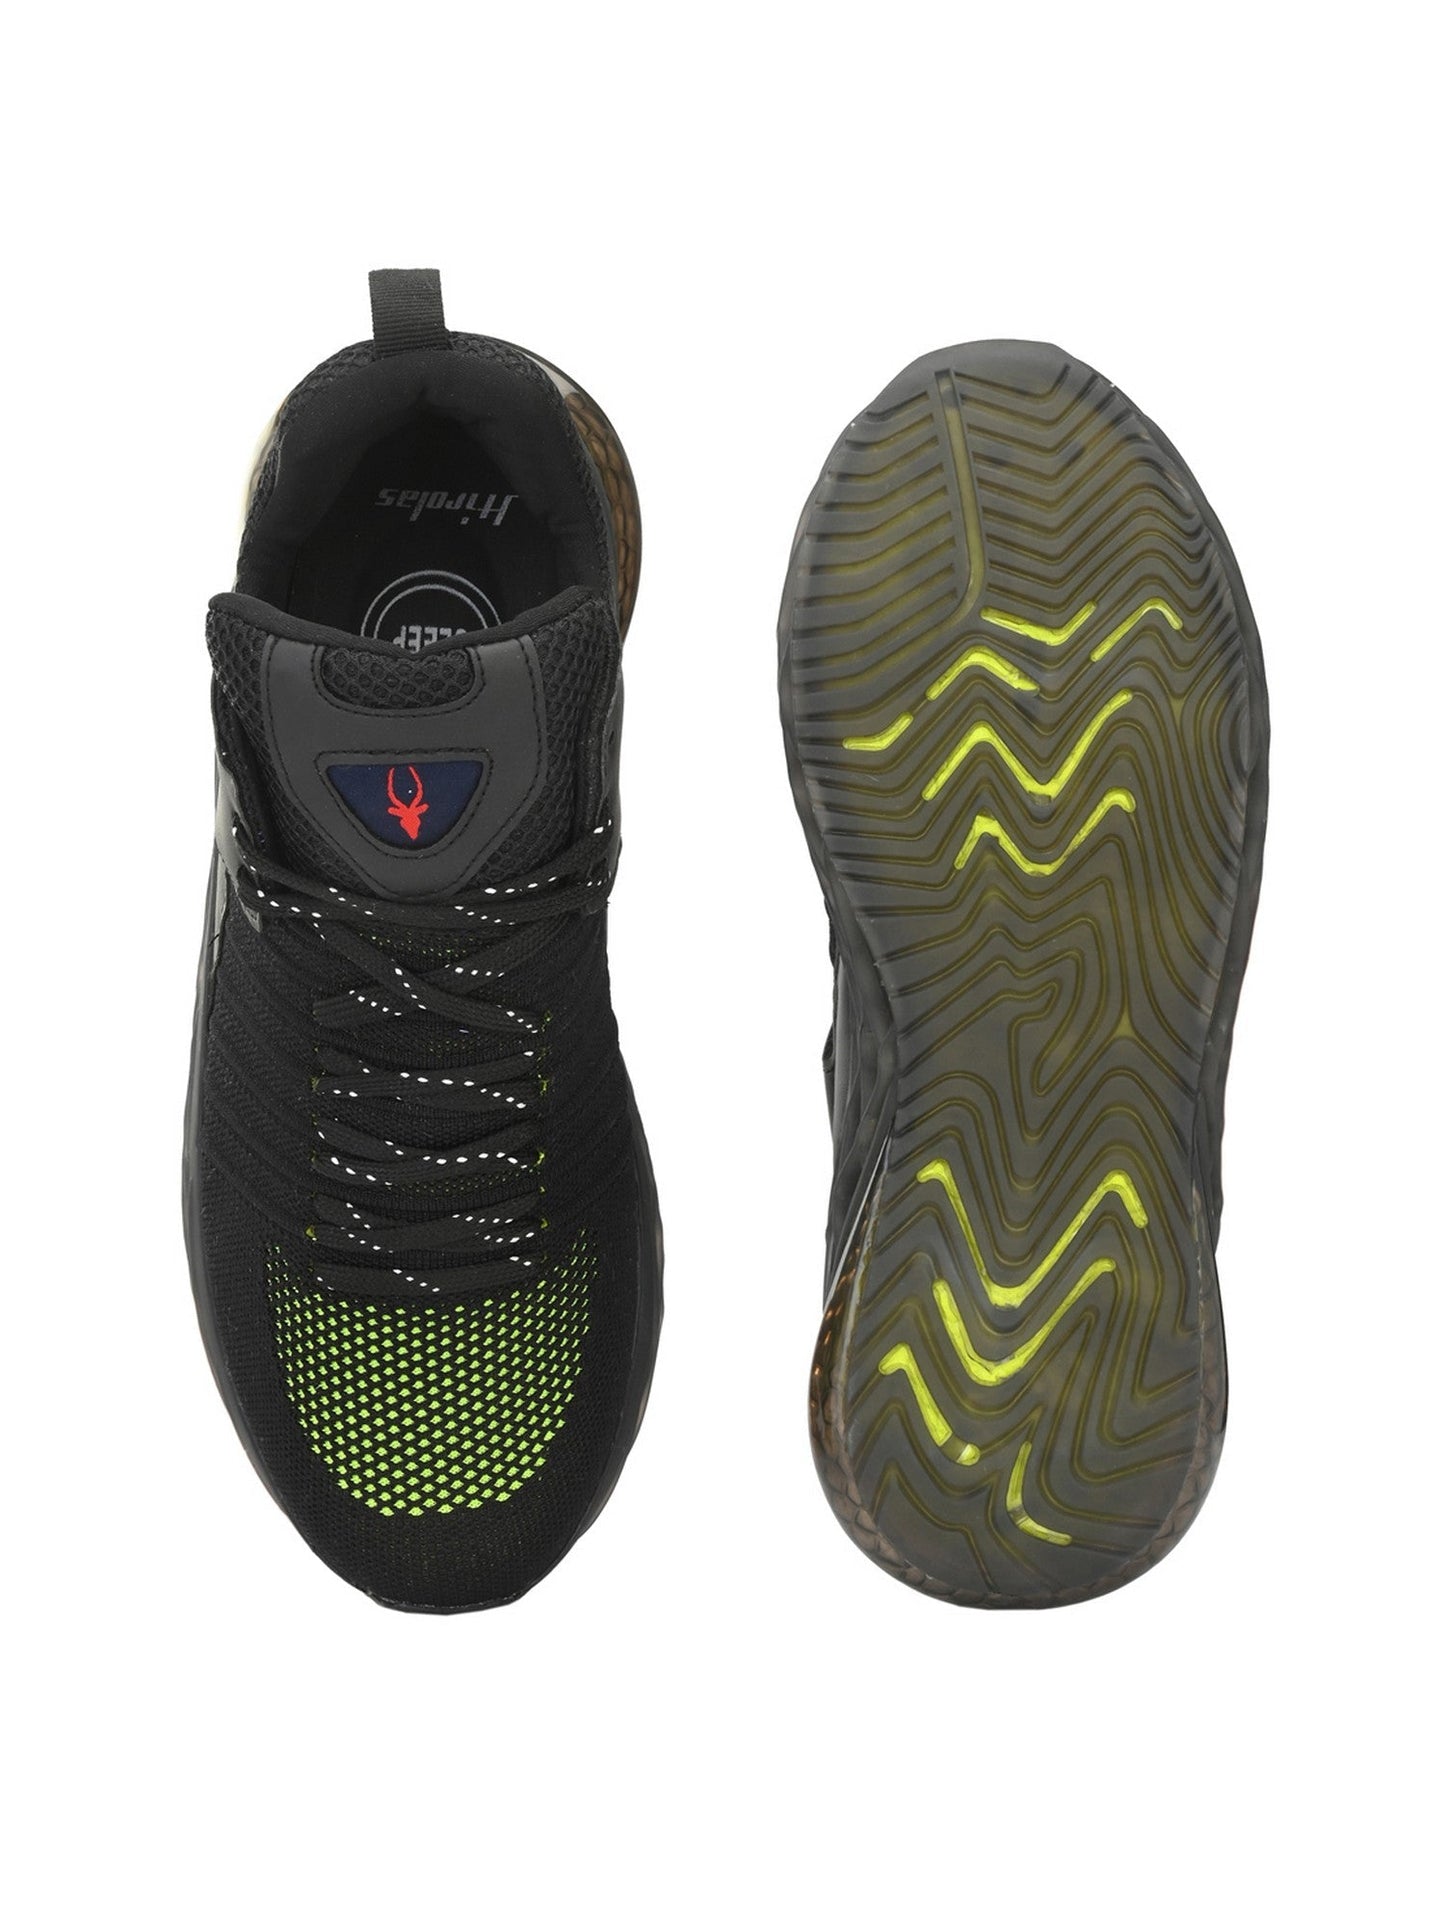 Hirolas® Men's Black/P.Green Elite Shock Absorbing Walking running Fitness Athletic Training Gym Ankle Fashion Lace Up Sport Shoes (HRLMP03BLK)